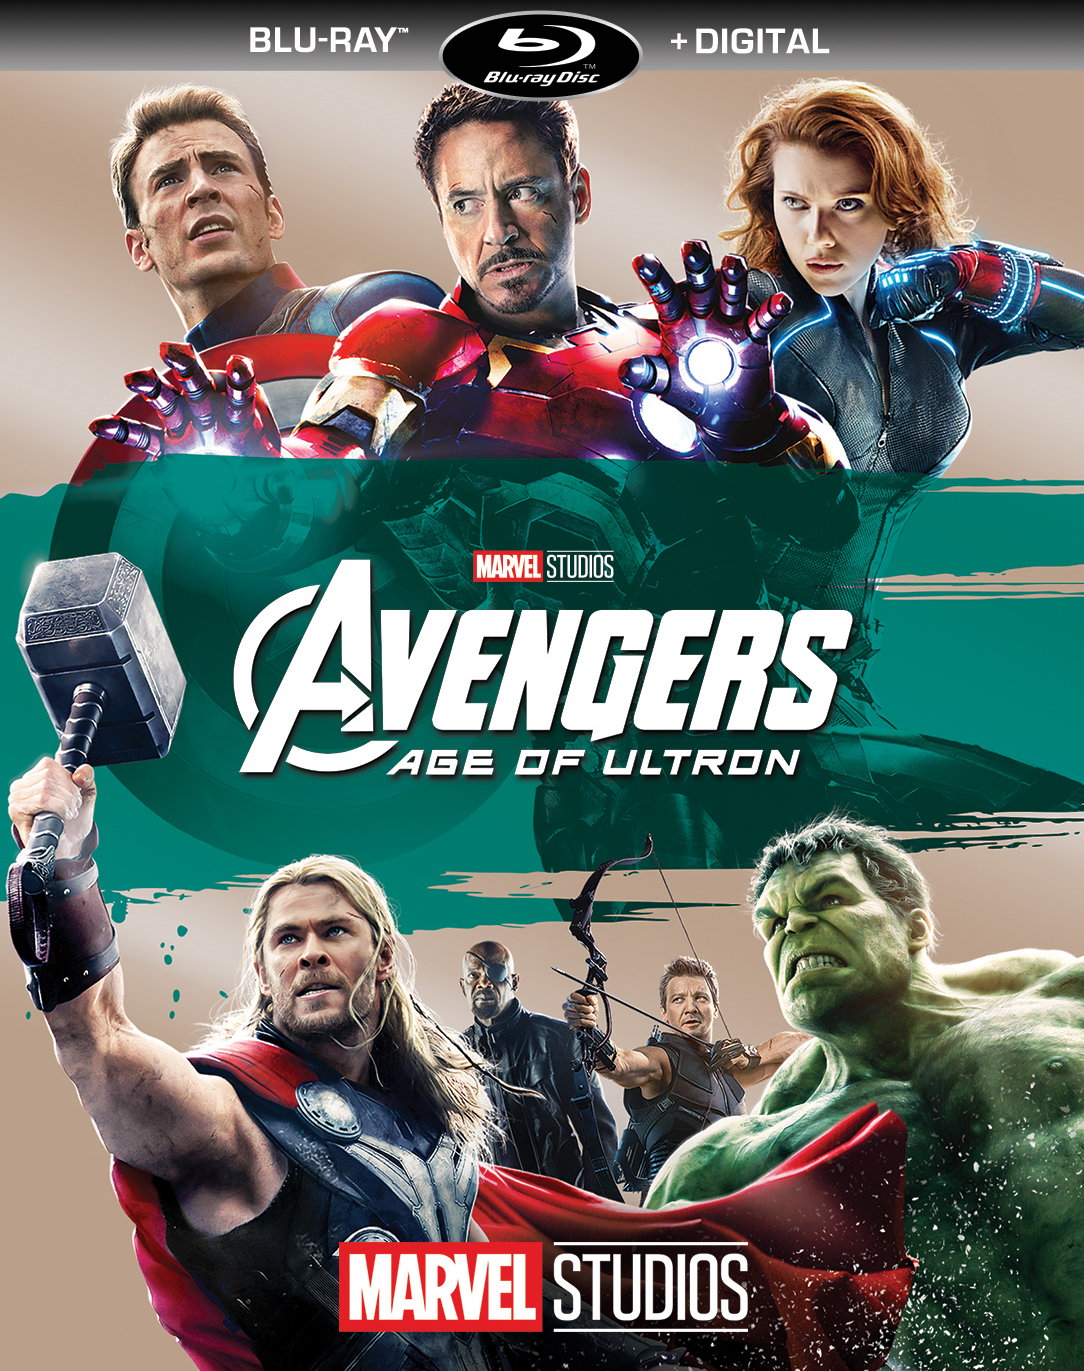 Avengers: Endgame [Includes Digital Copy] [Blu-ray] [2019] - Best Buy